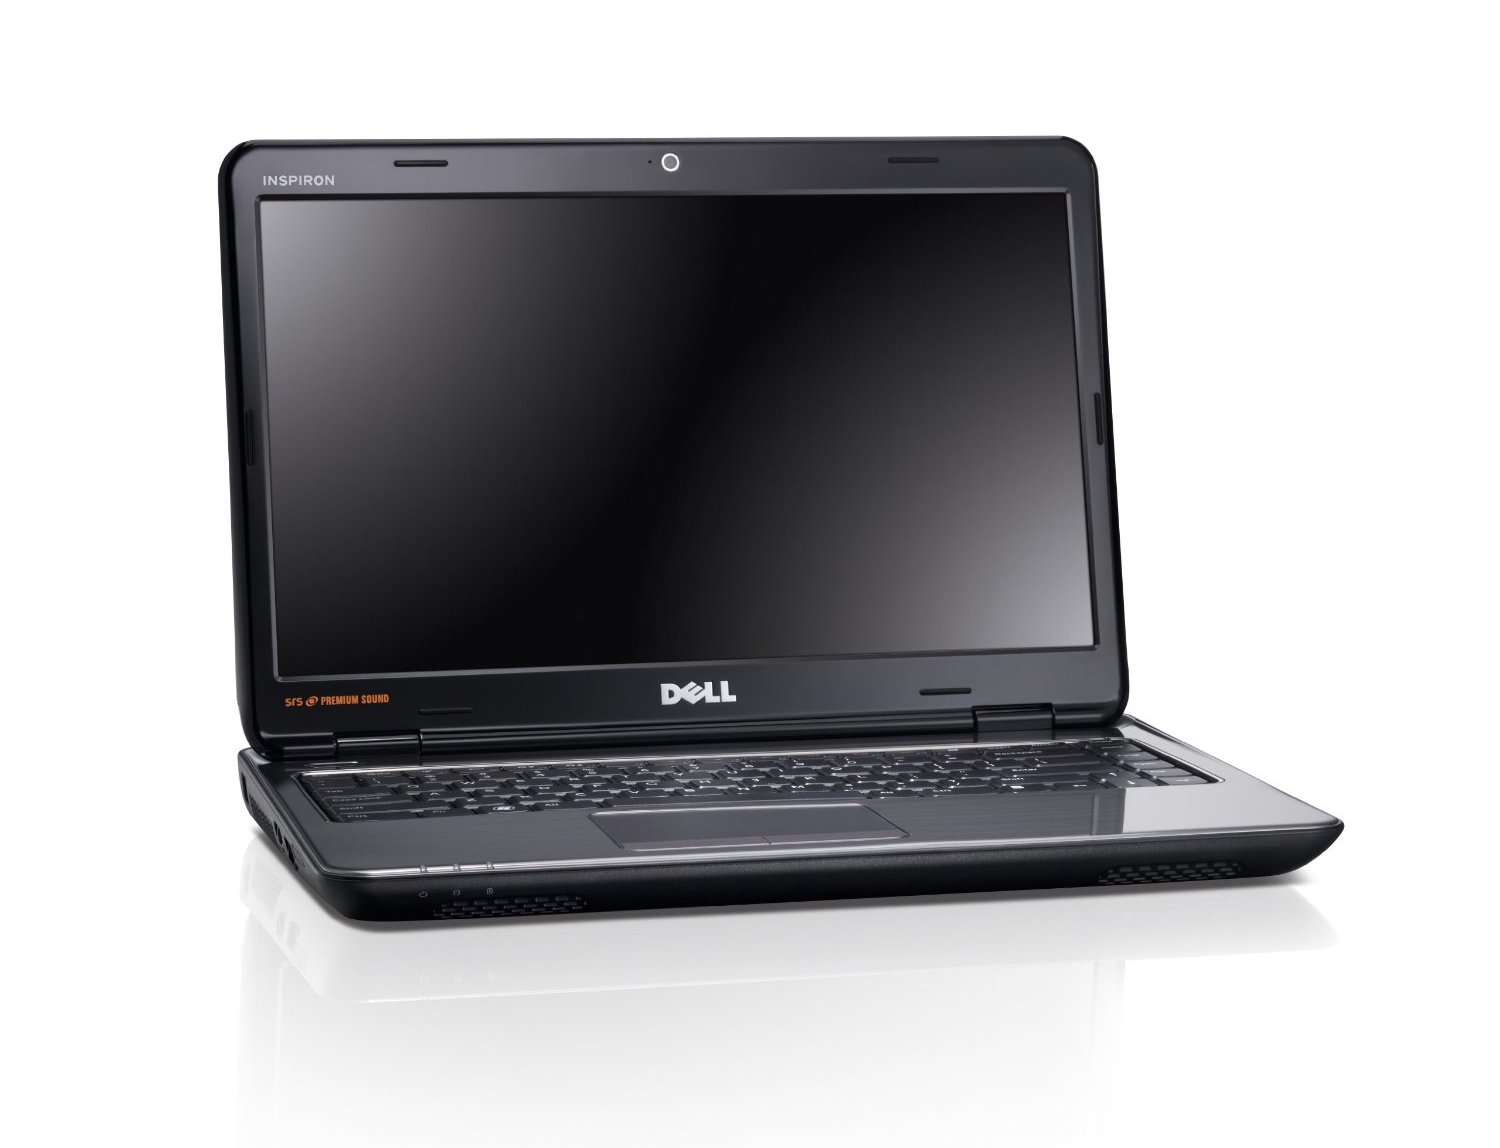 ... Yt2J91Q/s1600/Dell+Inspiron+14R+1181MRB+14-Inch+Laptop+Best+price.jpg